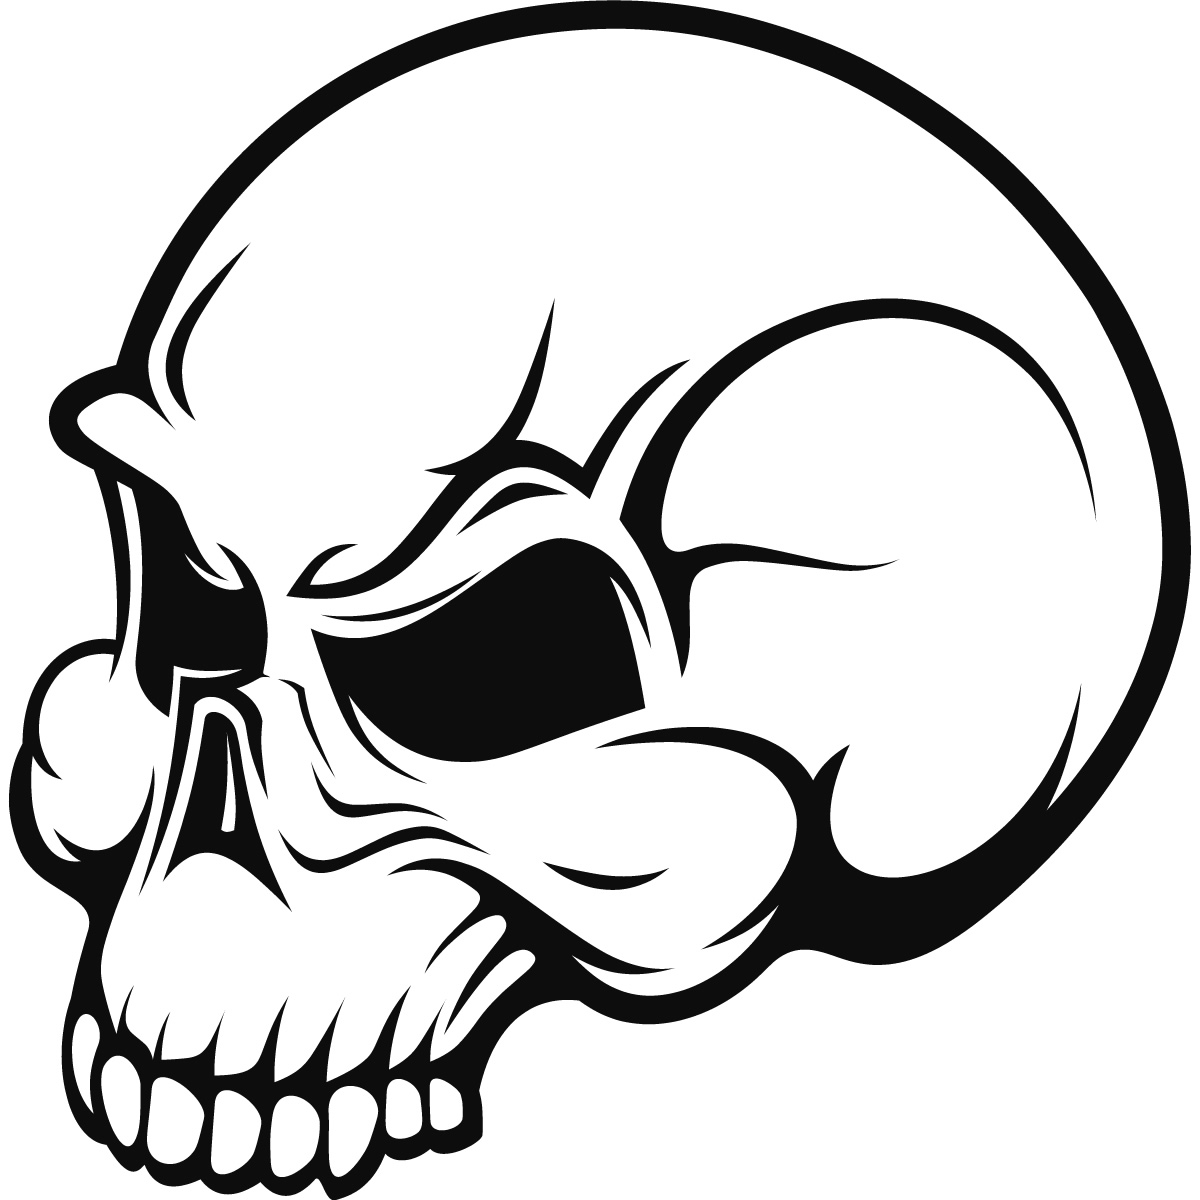 Skull Line Drawings - ClipArt Best